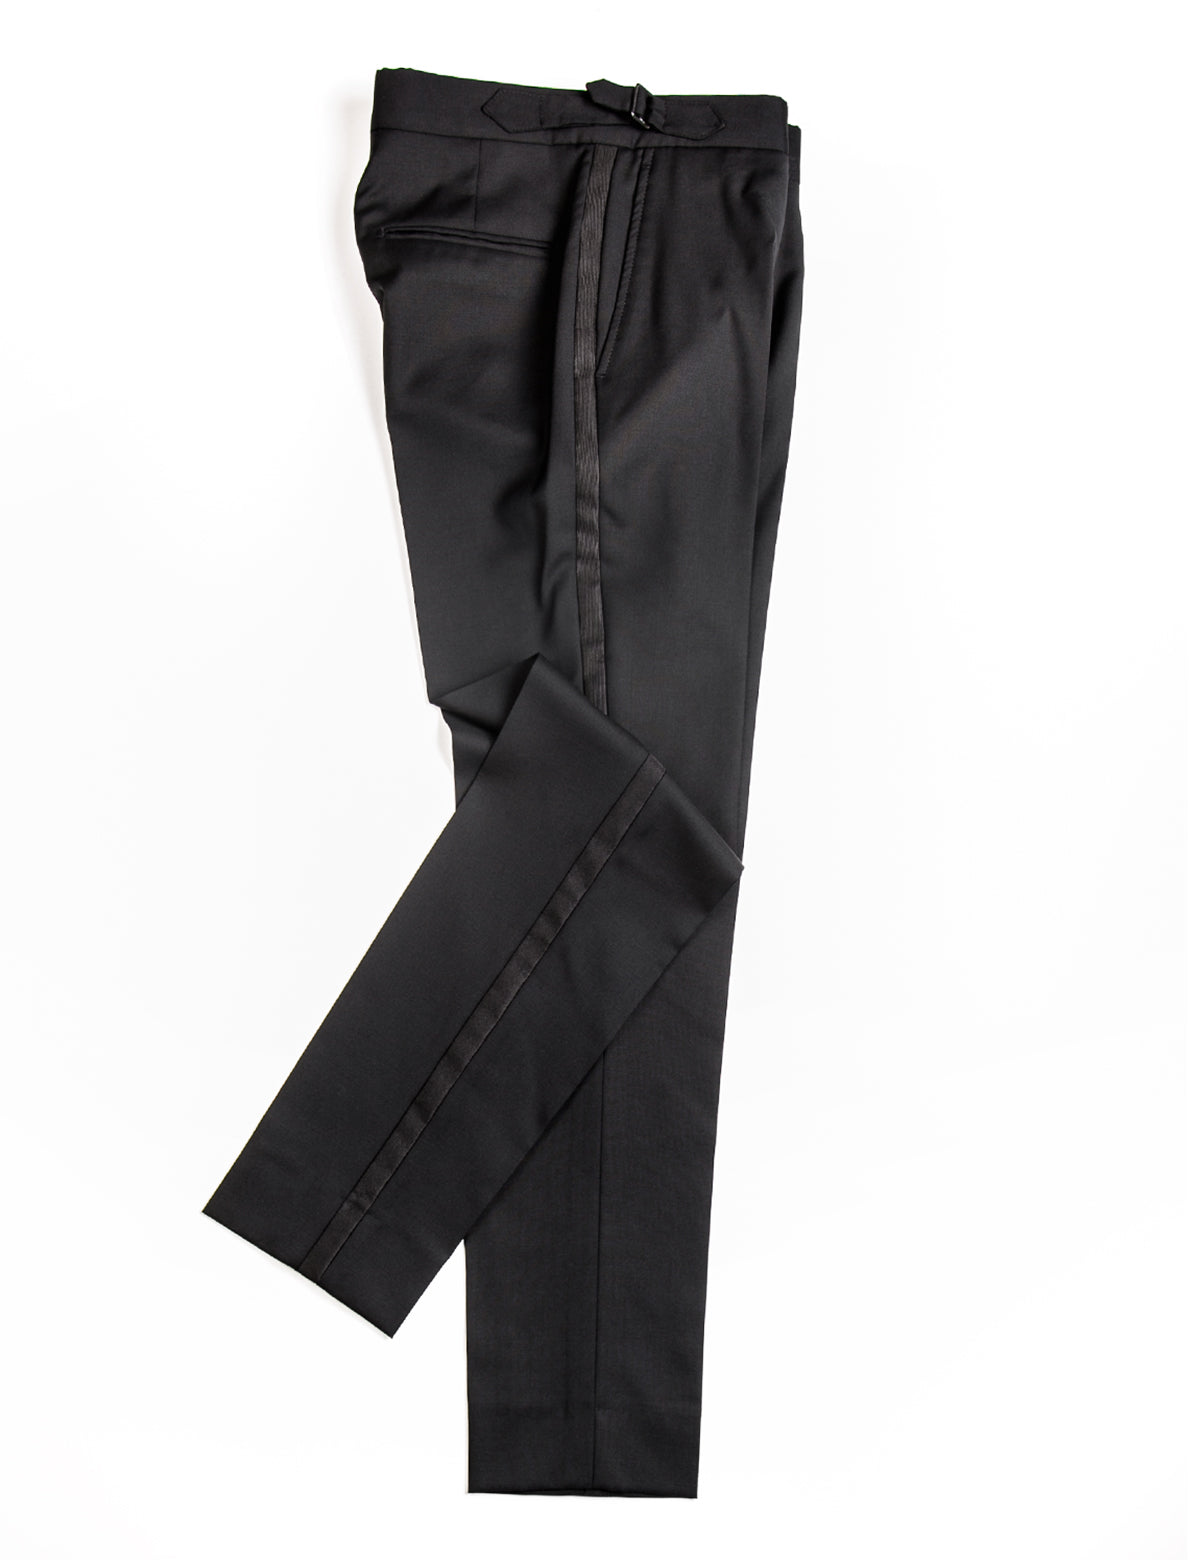 BKT50 Tuxedo Trouser in Super 110s - Black with Grosgrain Stripe – Brooklyn  Tailors